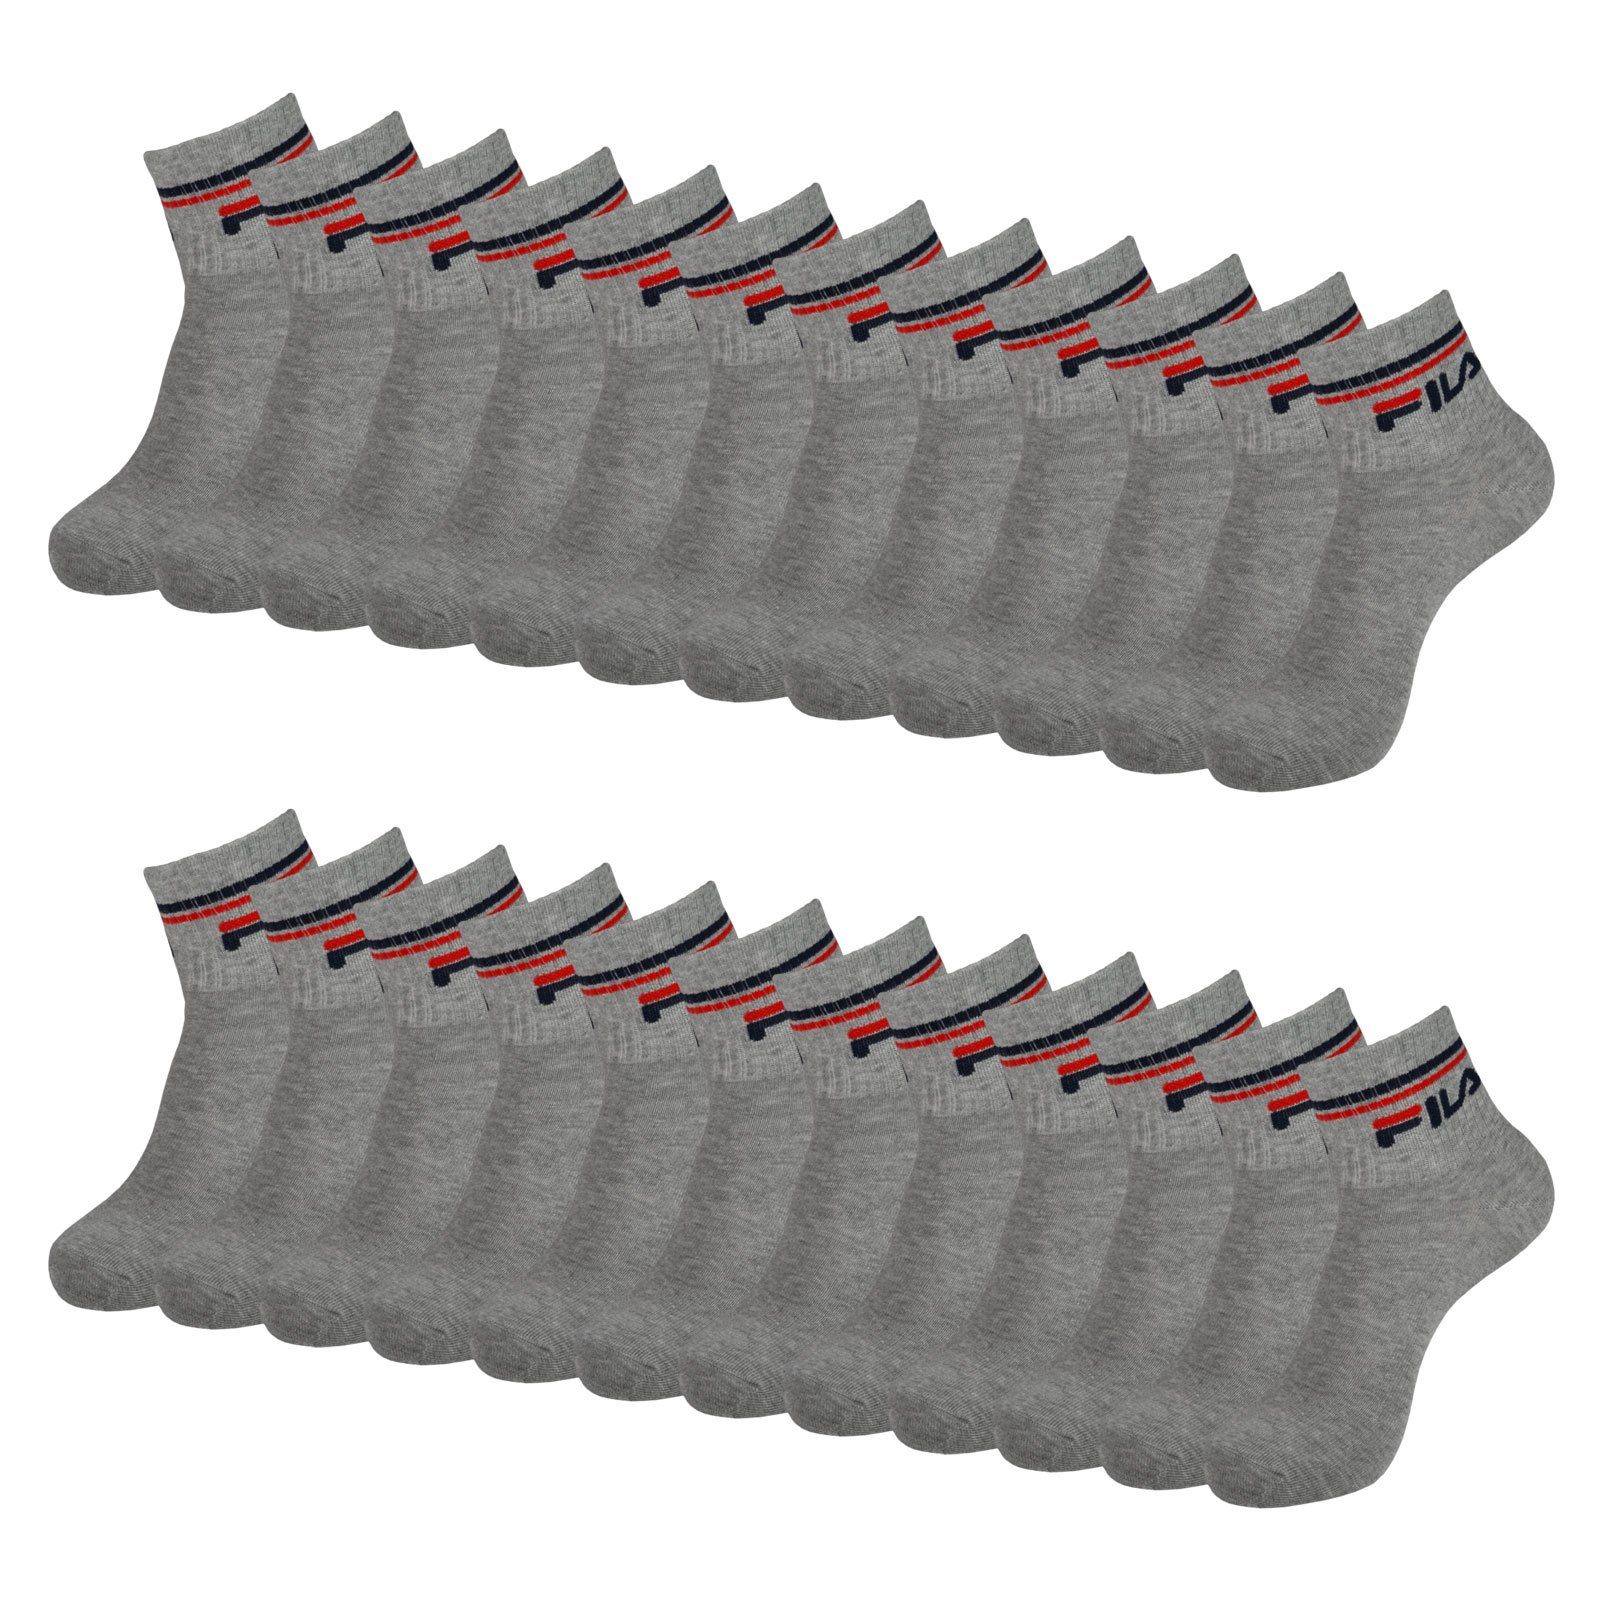 Fila Kurzsocken Quarter Socks Calza (12-Paar) im sportlichen Look mit Rippbündchen 400 grey melange